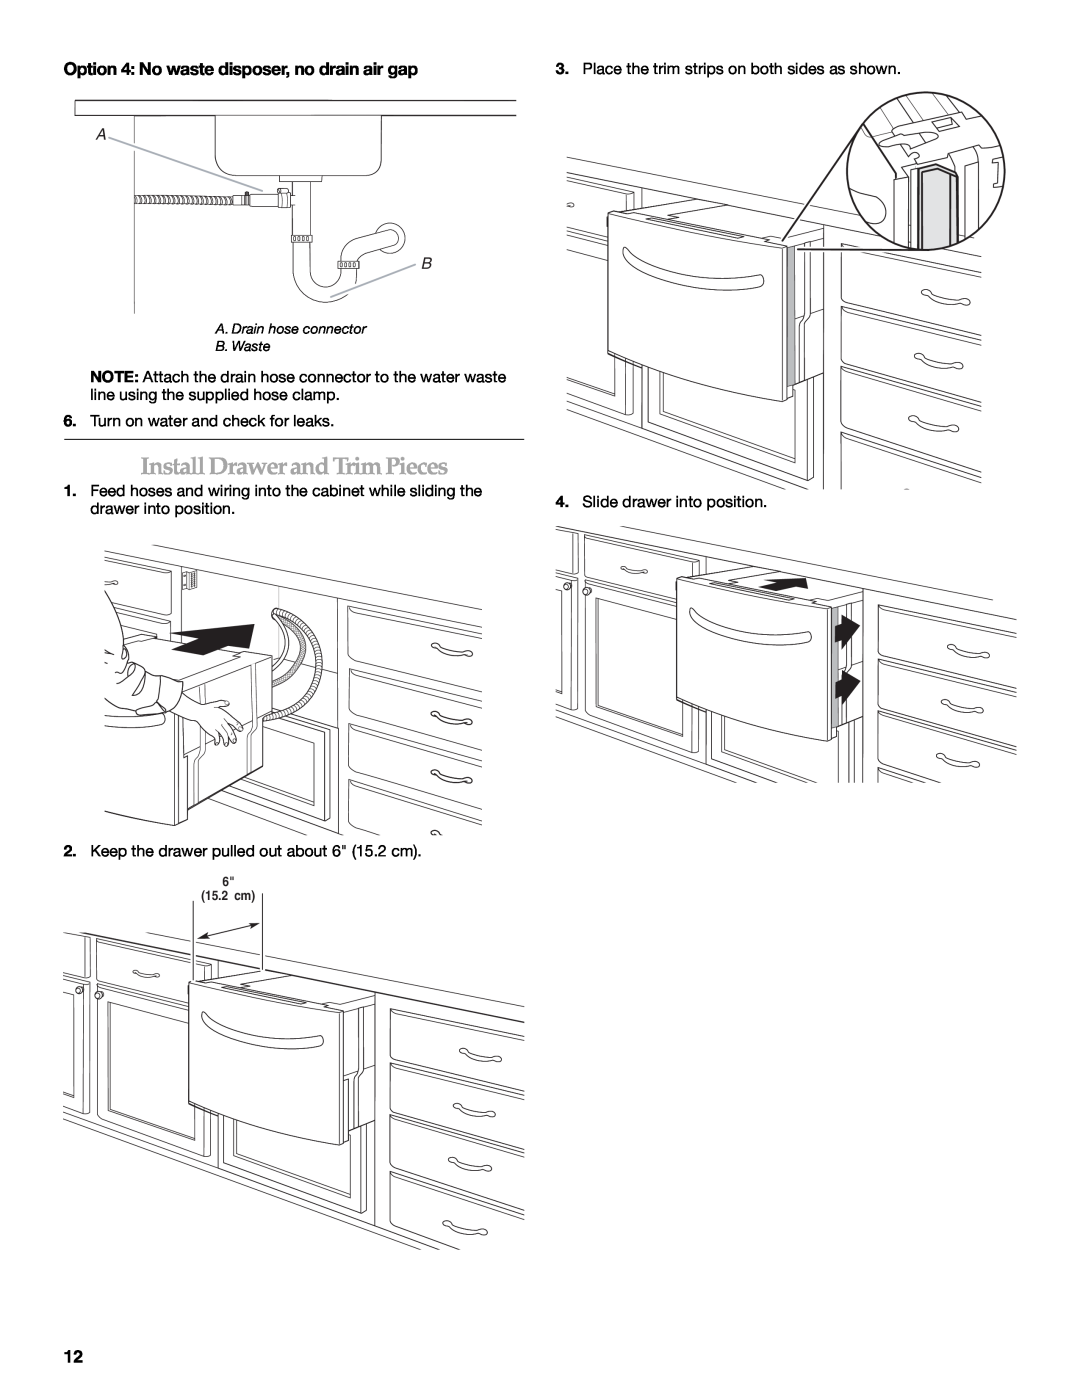 KitchenAid KUDD03STBL Install Drawer and Trim Pieces, Option 4 No waste disposer, no drain air gap 